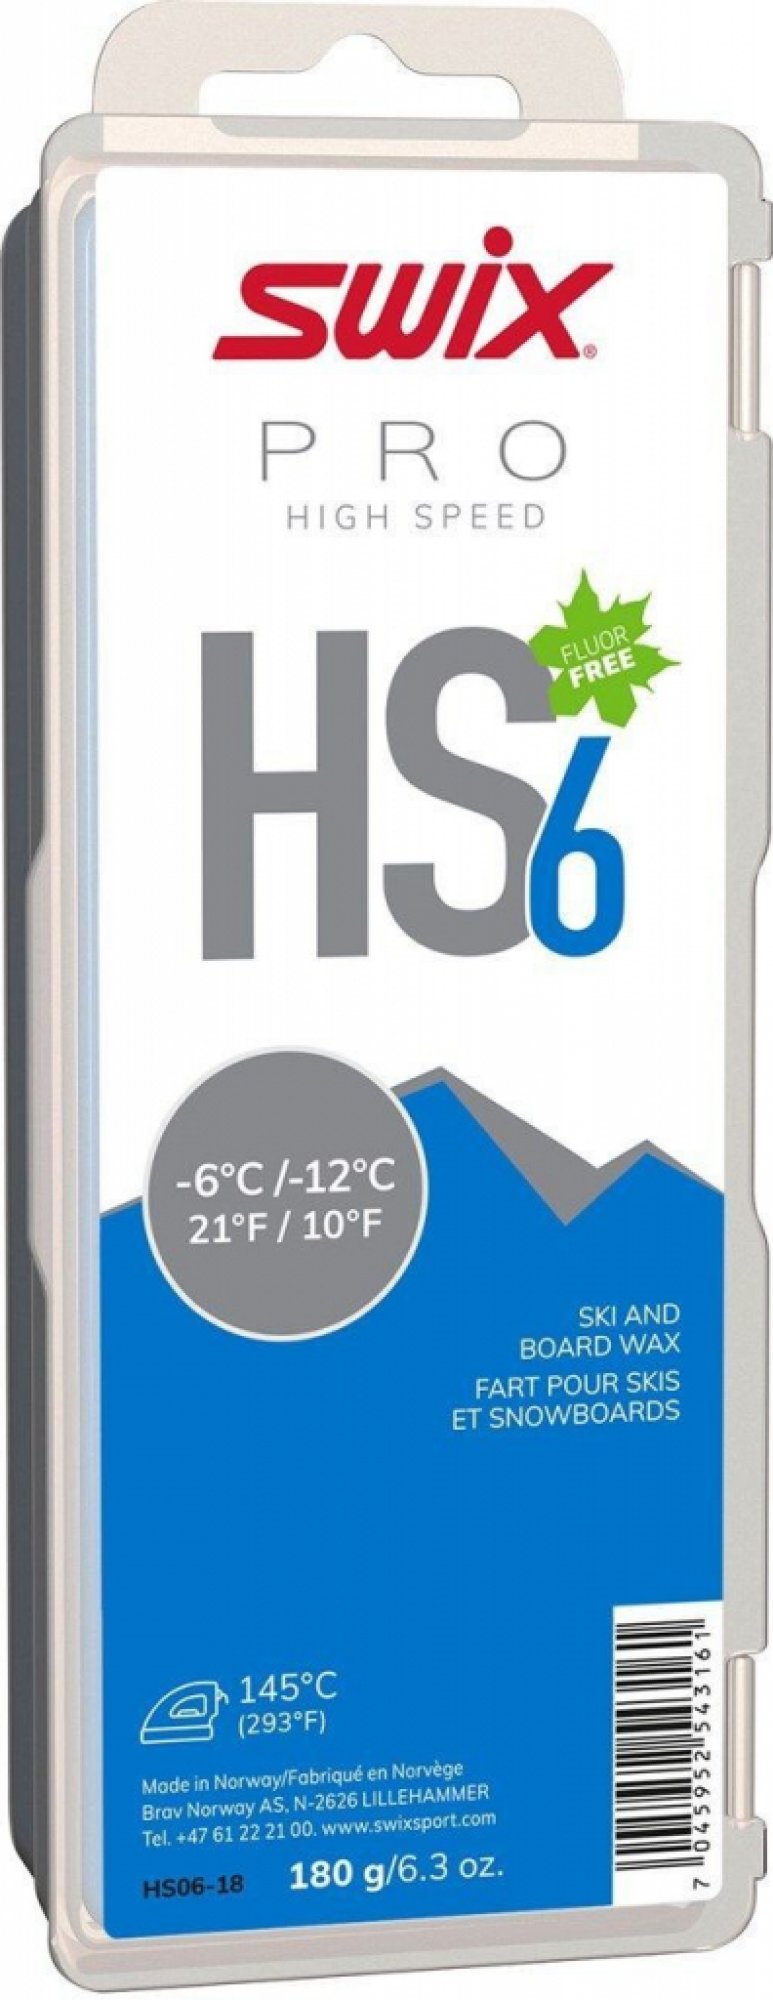 Skluzný vosk Swix High Speed, HS6 modrý, -6°C/-12°C,180g